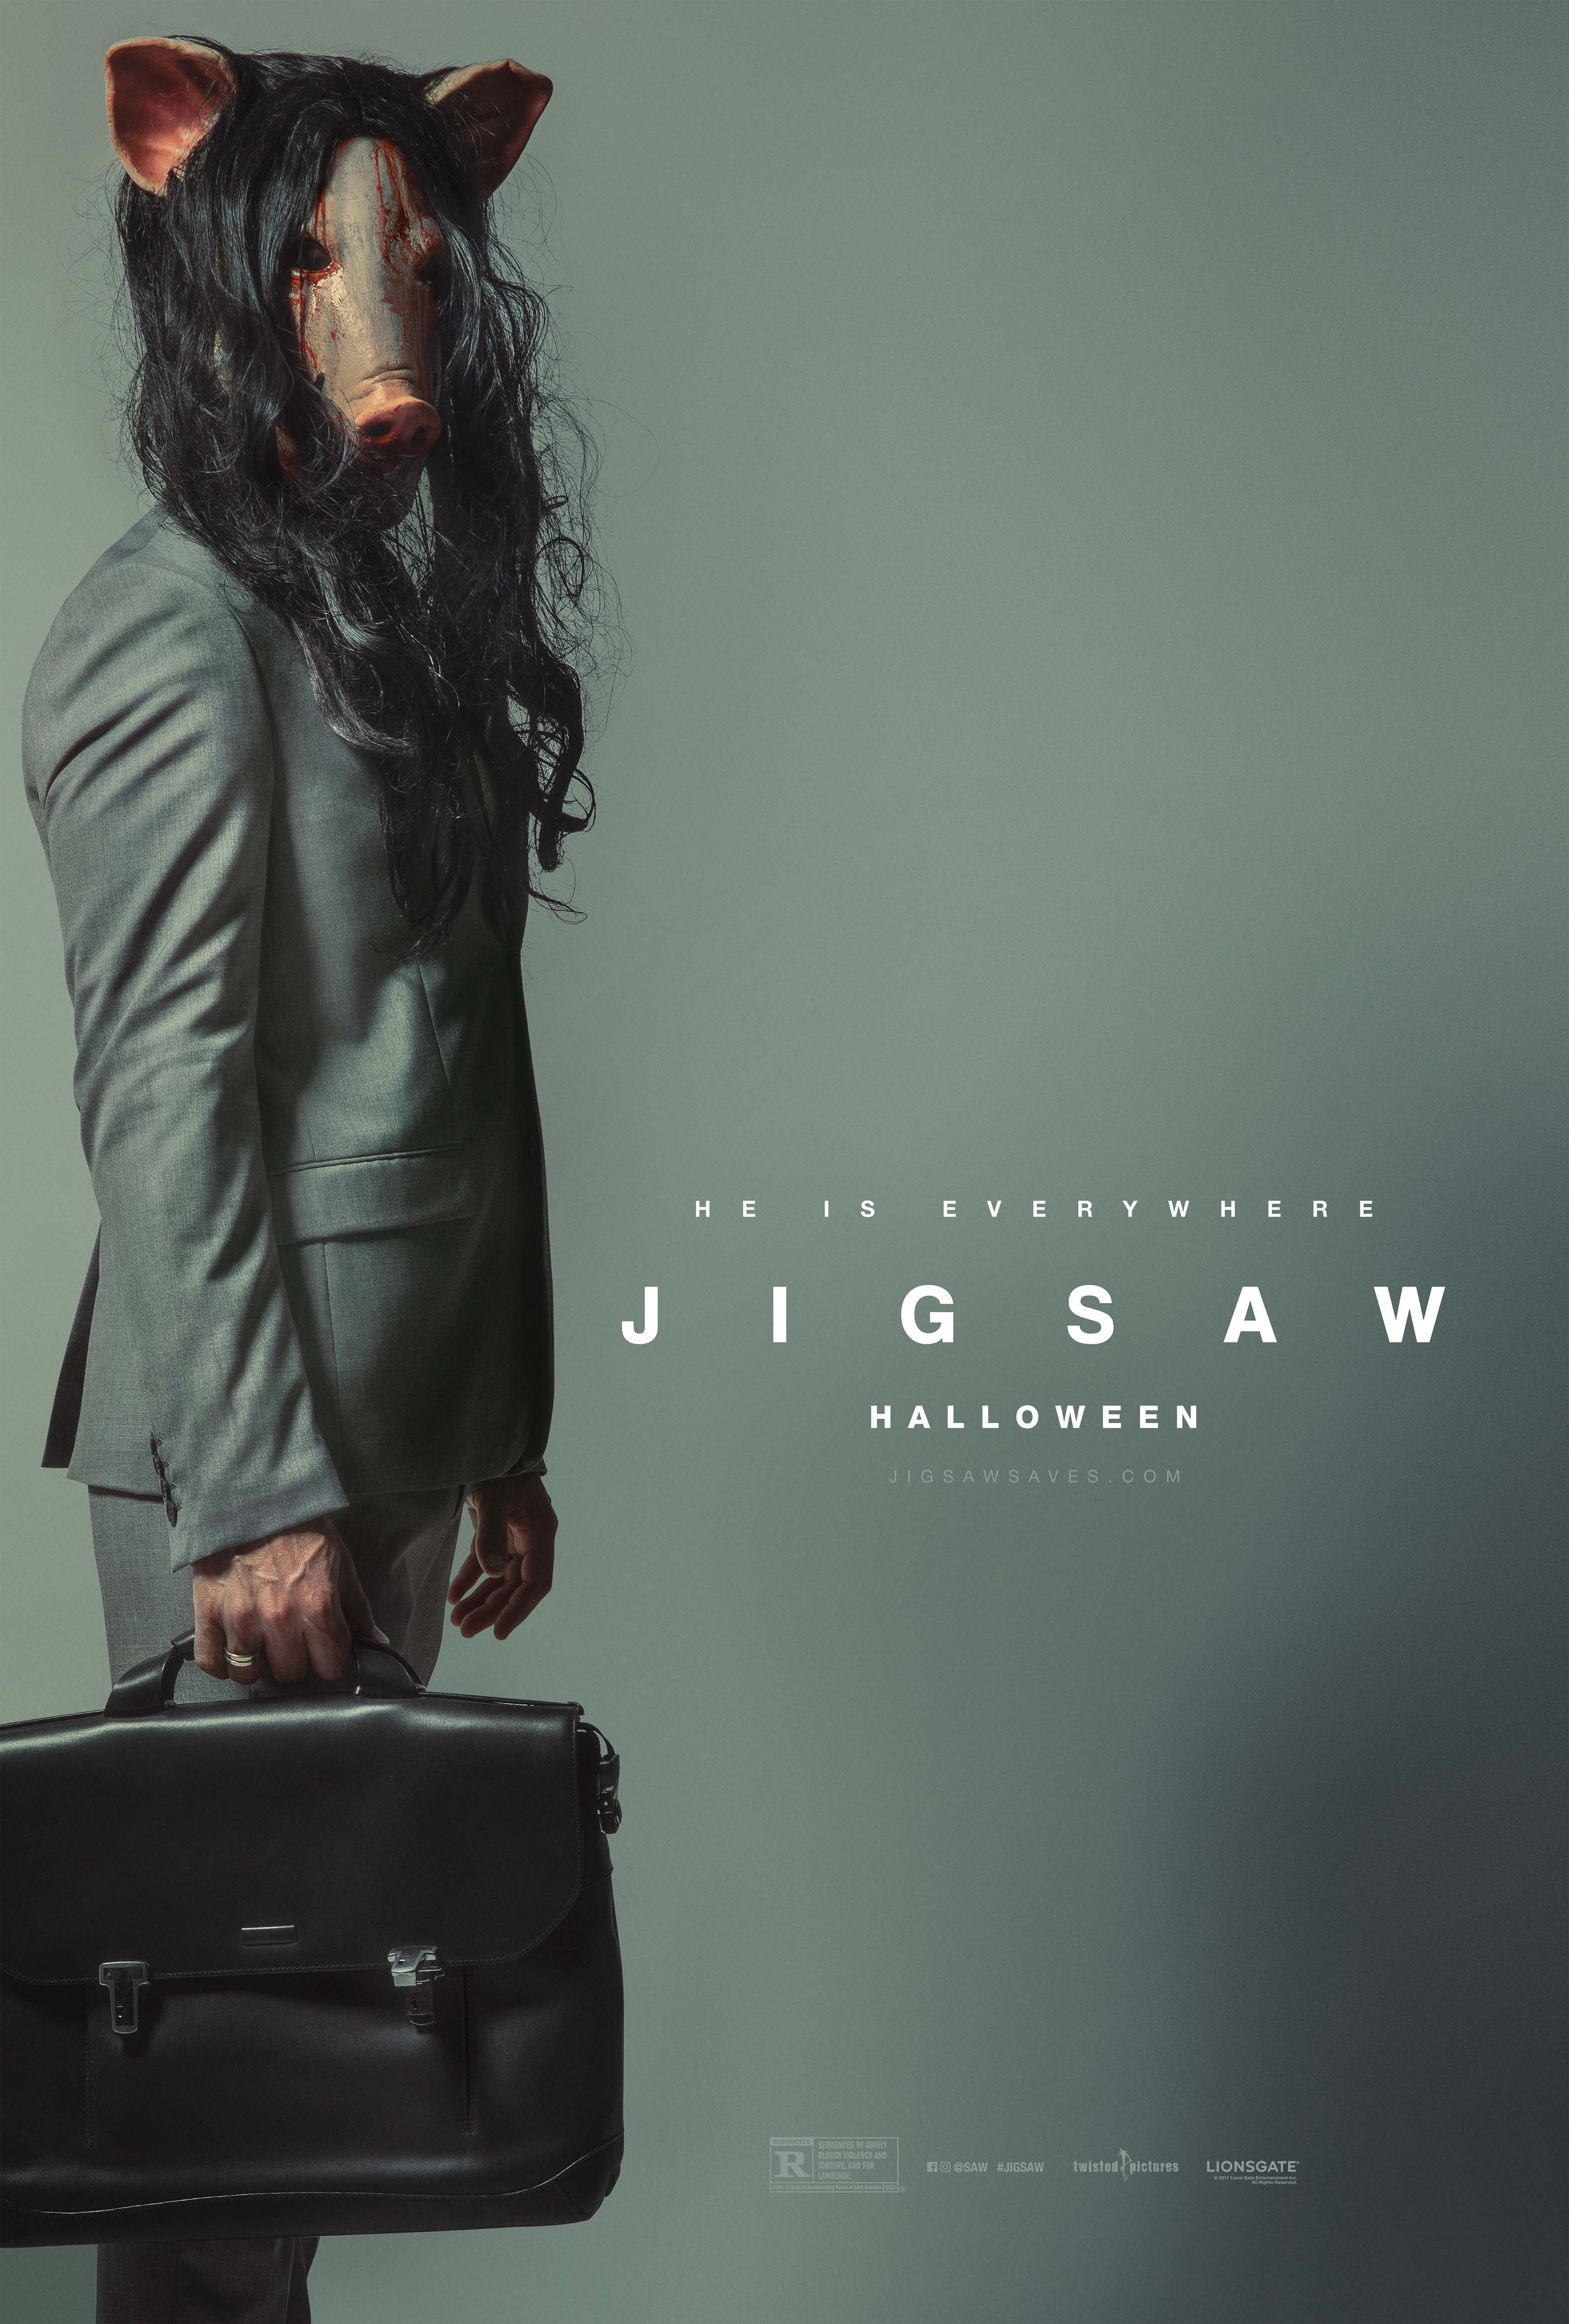 Jigsaw 残酷ホラー映画 Saw シリーズが 痛々しい拷問ゲームを再開した第8弾の最新作 ジグソウ の予告編を初公開 Cia Movie News